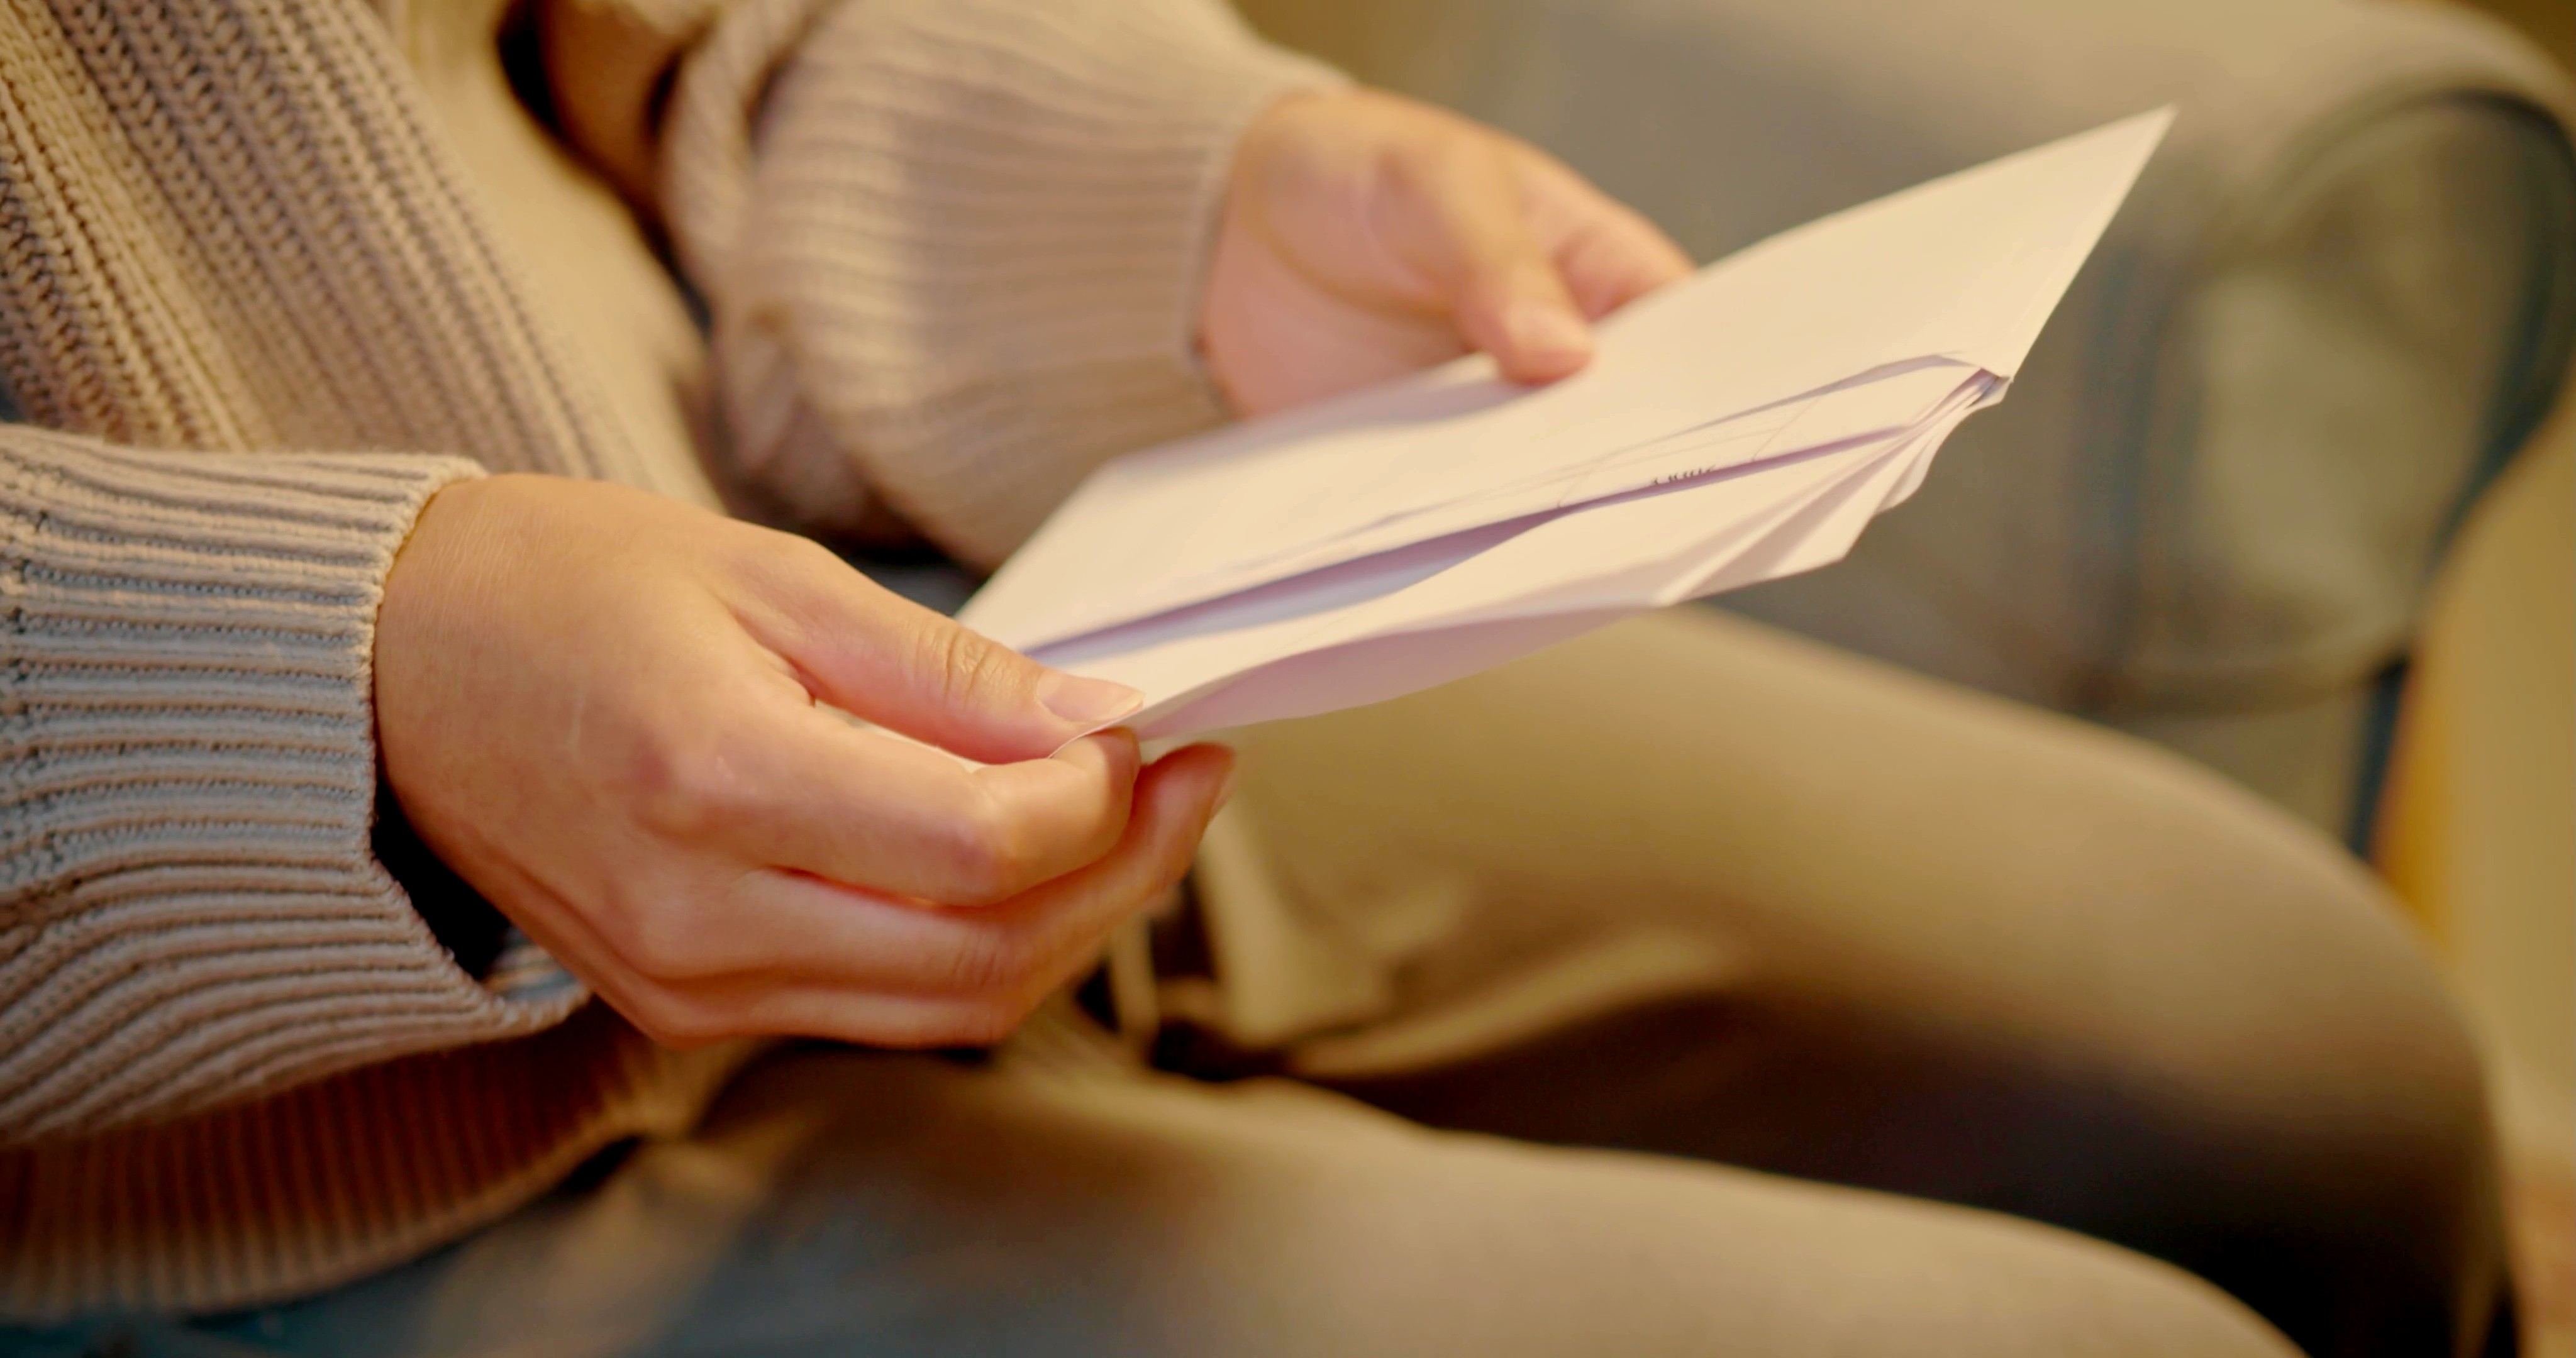 A woman opening an envelope | Source: Shutterstock